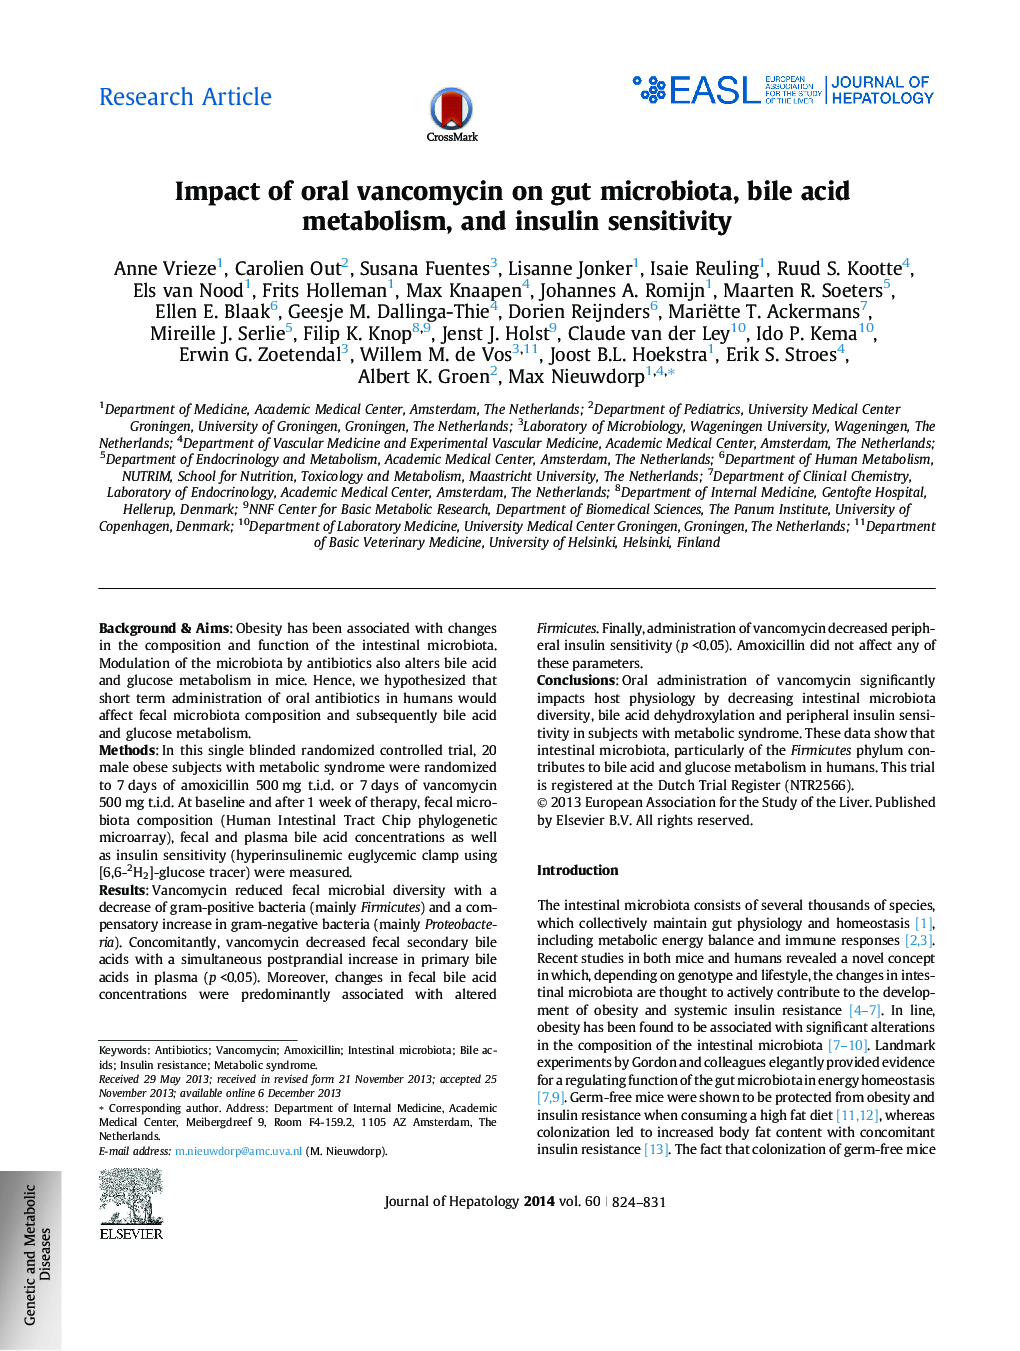 Research ArticleImpact of oral vancomycin on gut microbiota, bile acid metabolism, and insulin sensitivity